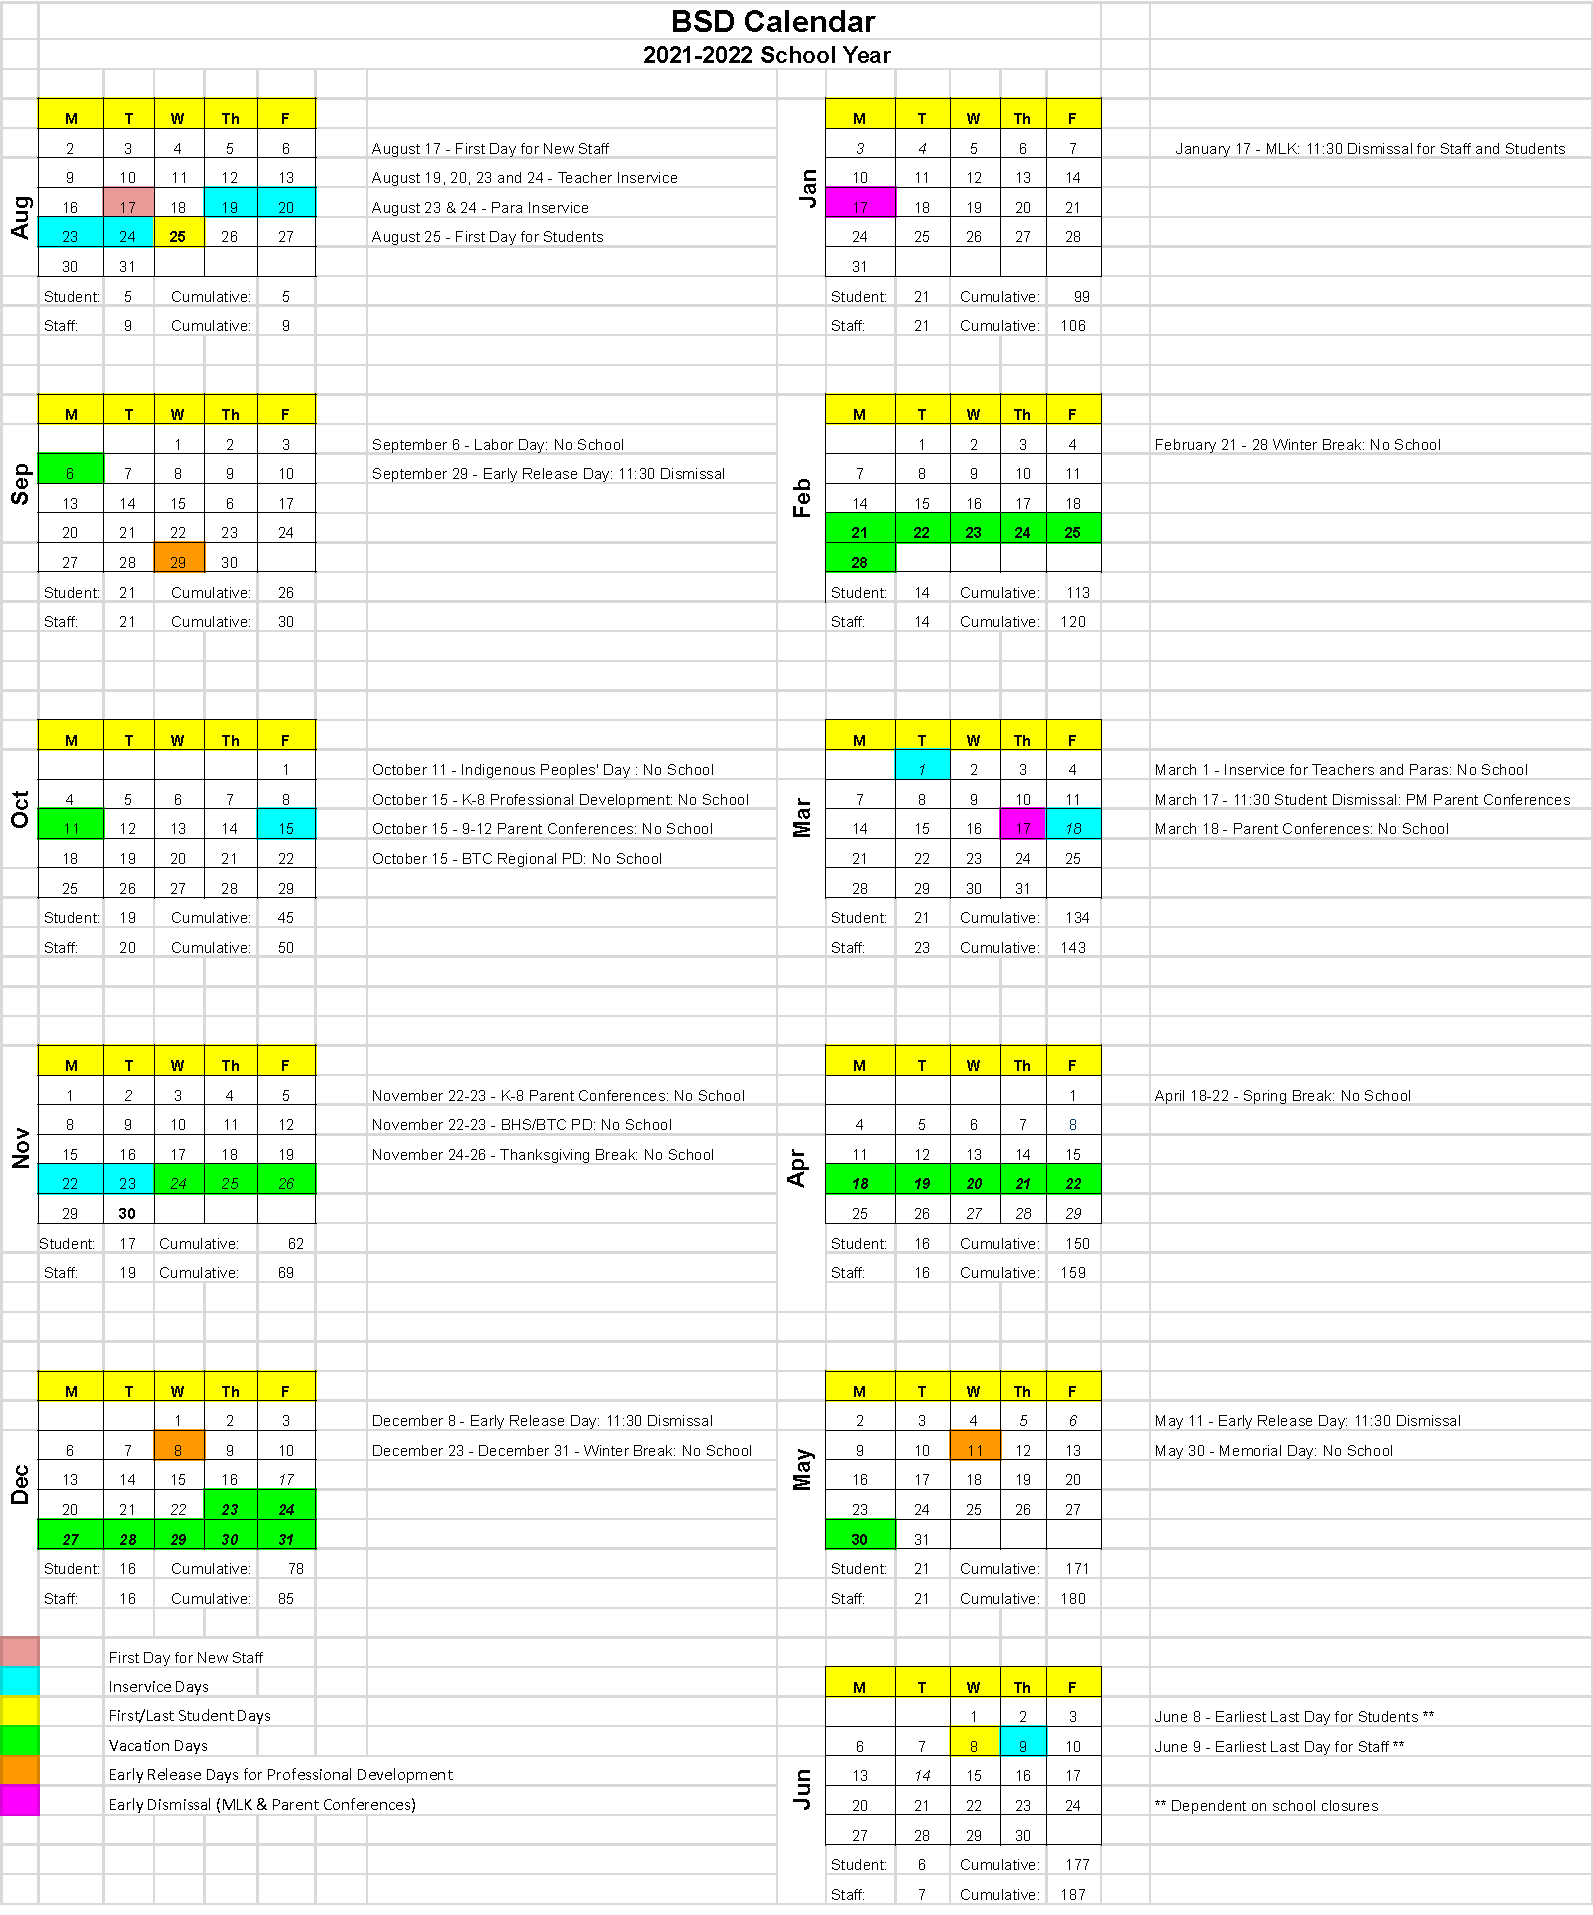 Middlebury Academic Calendar 2022 2021-2022 Calendar Released